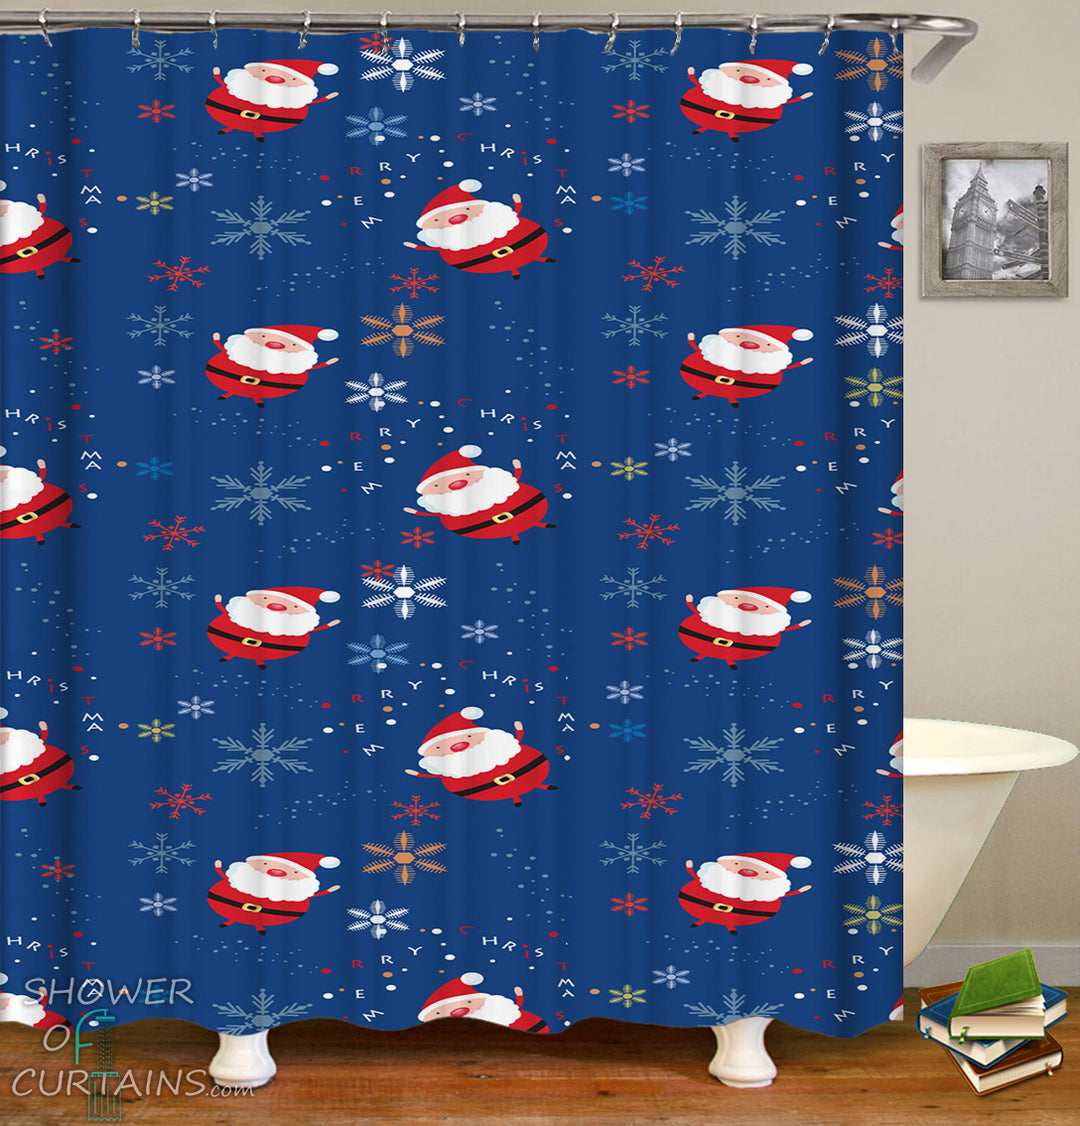 Santa Shower Curtain of Santa And Snow Pattern